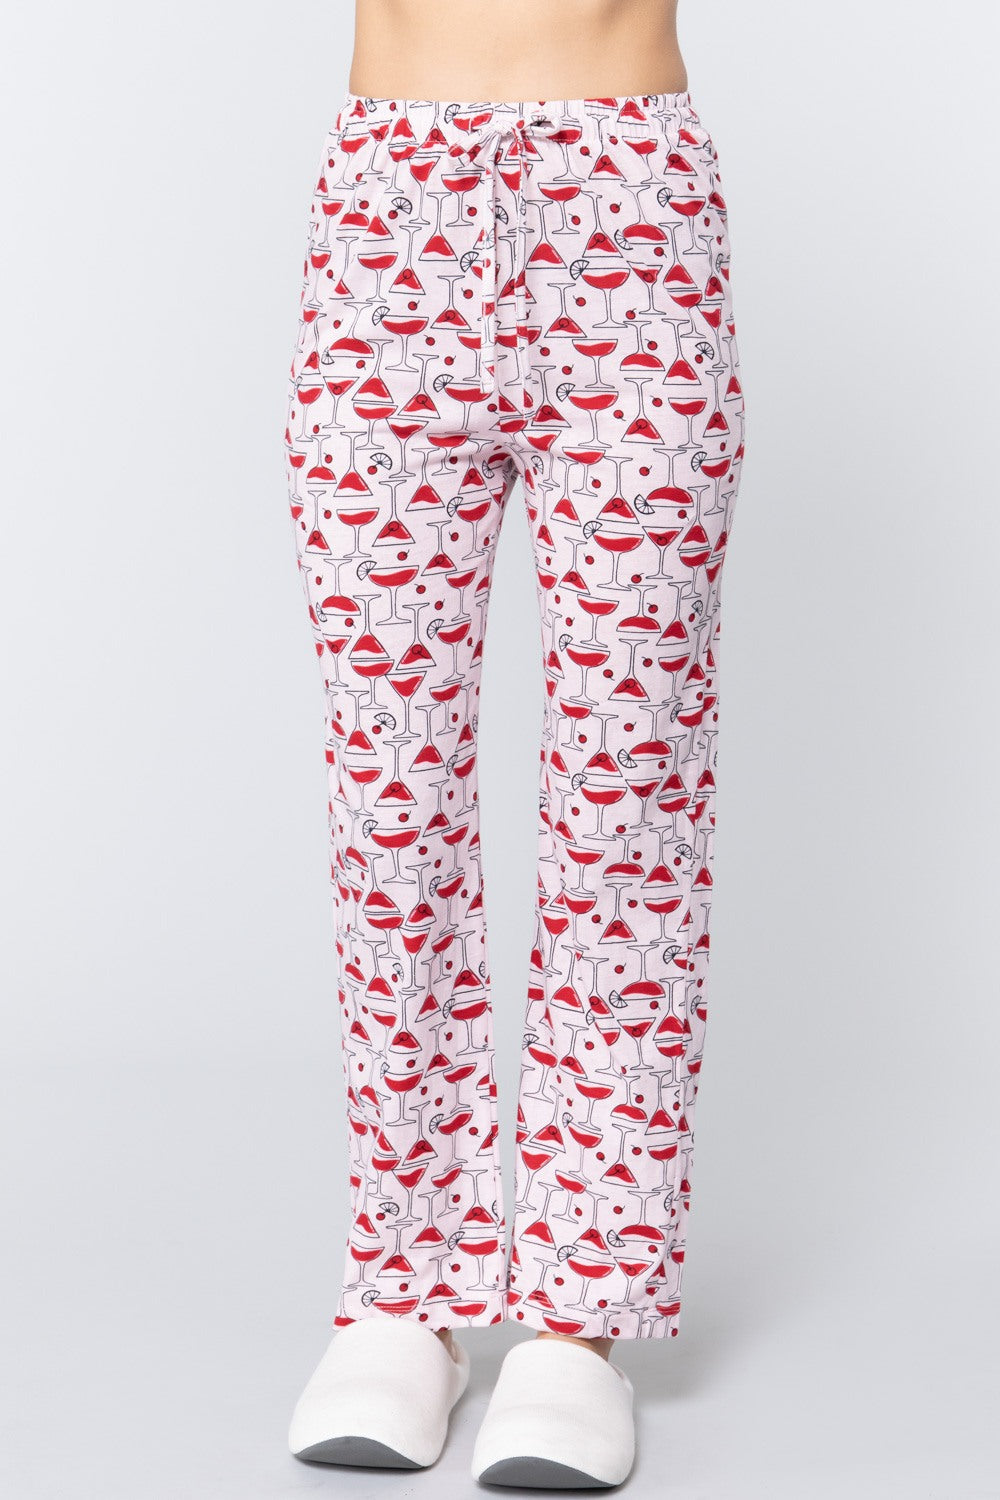 Cocktail Print Cotton Pajama - Fashion Quality Boutik